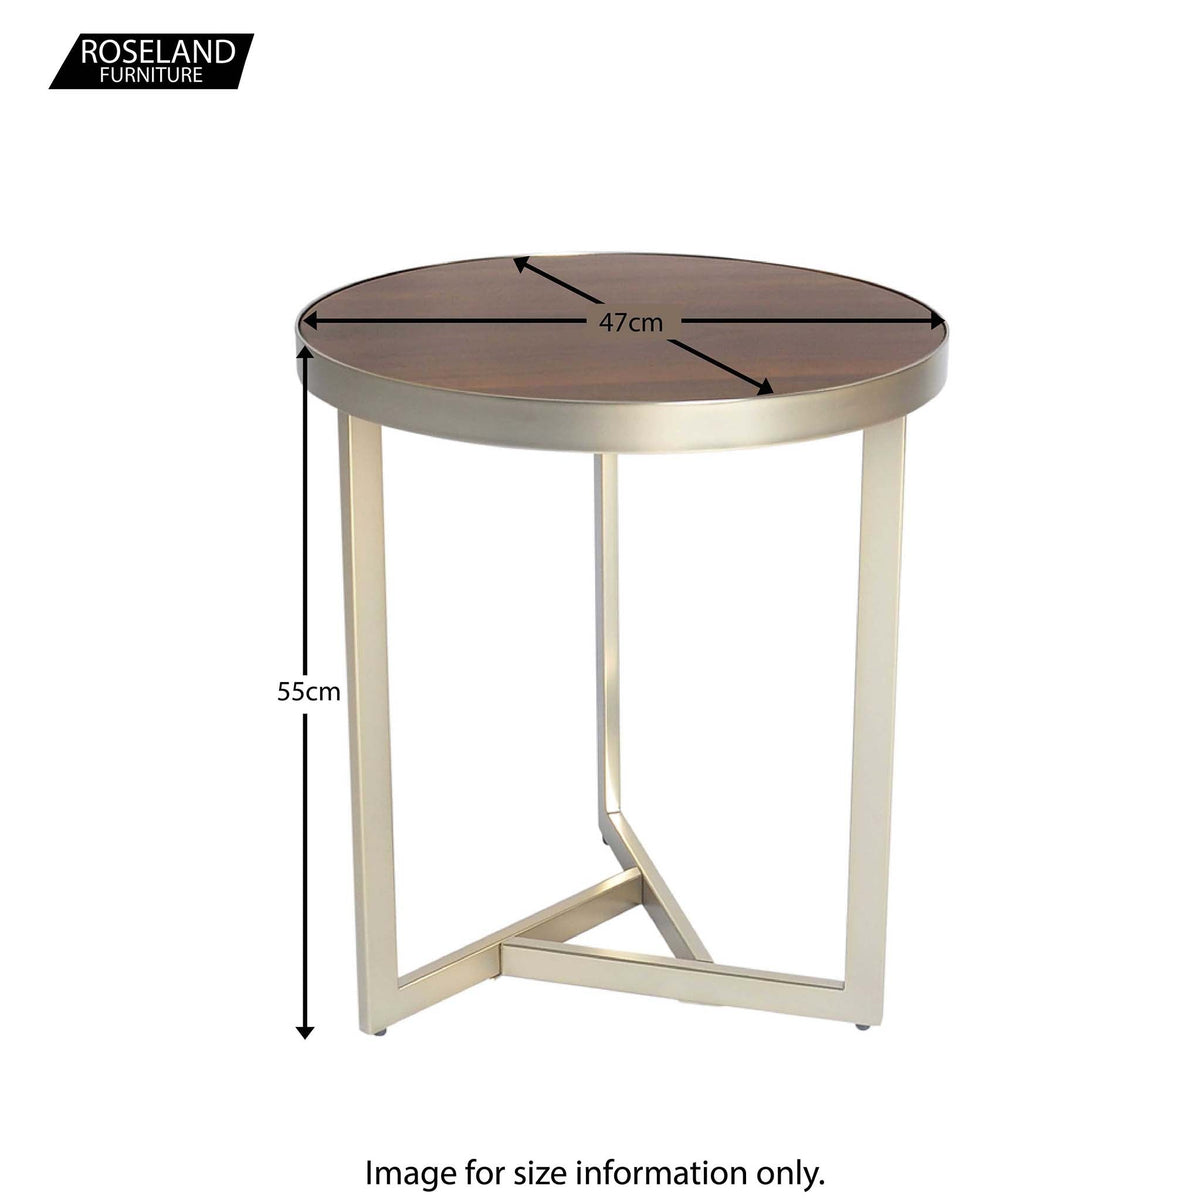 Alfreton Walnut effect round side lamp table dimensions